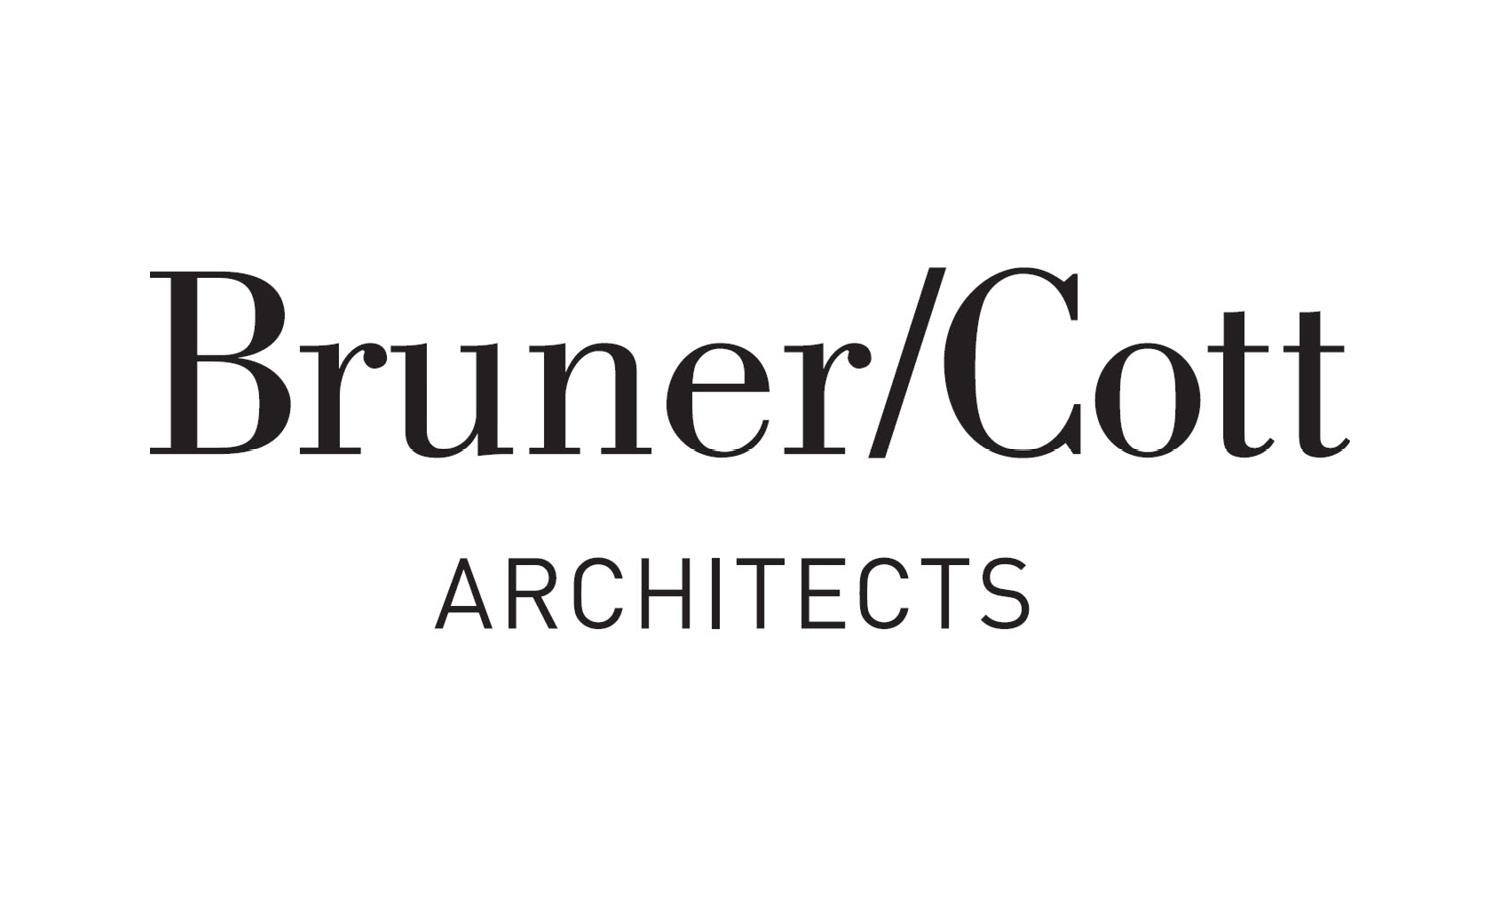 Bruner/Cott Architects